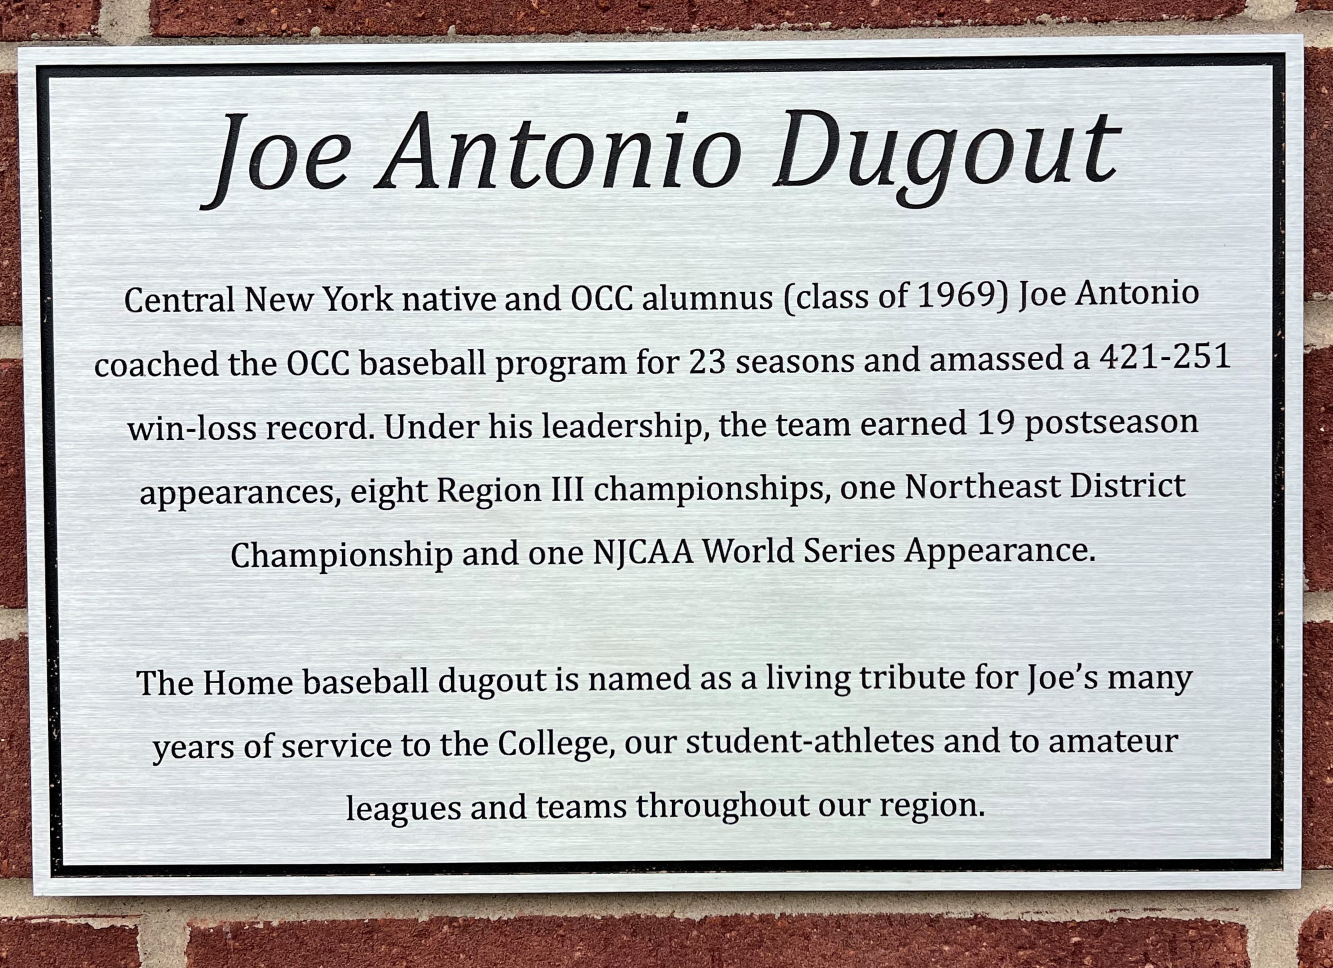 Joe Antonio Dugout sign